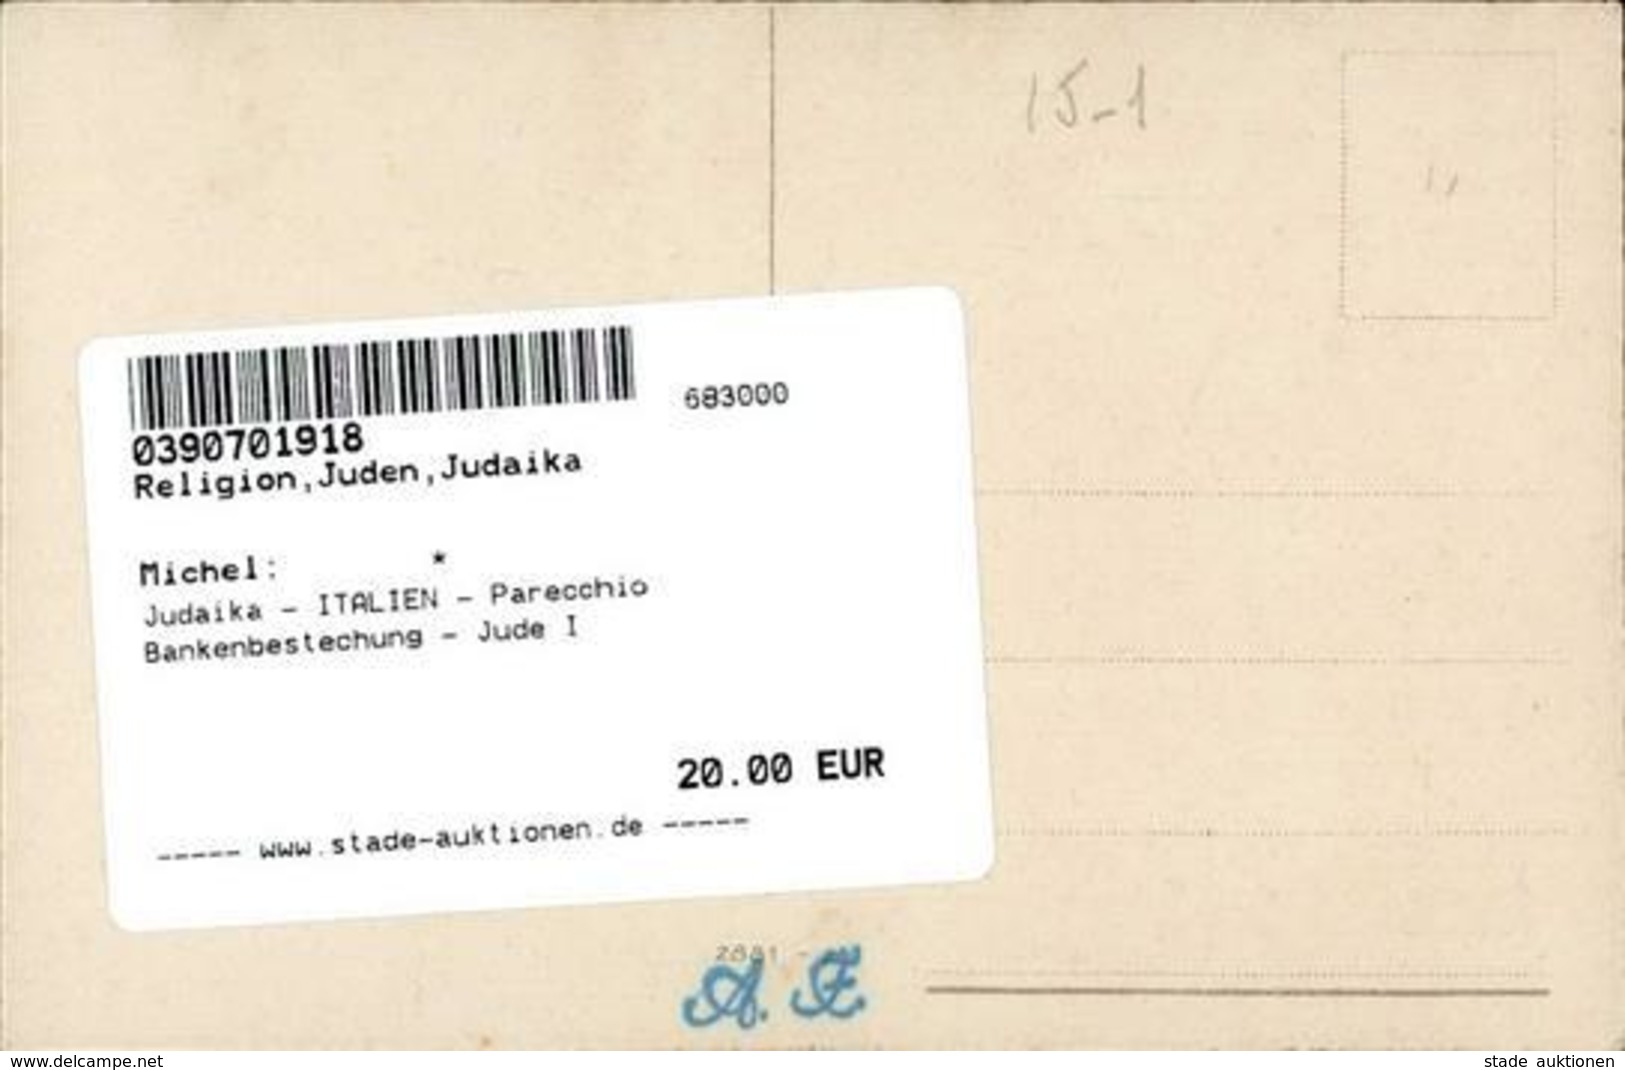 Judaika - ITALIEN - Parecchio Bankenbestechung - Jude I Judaisme - Jewish